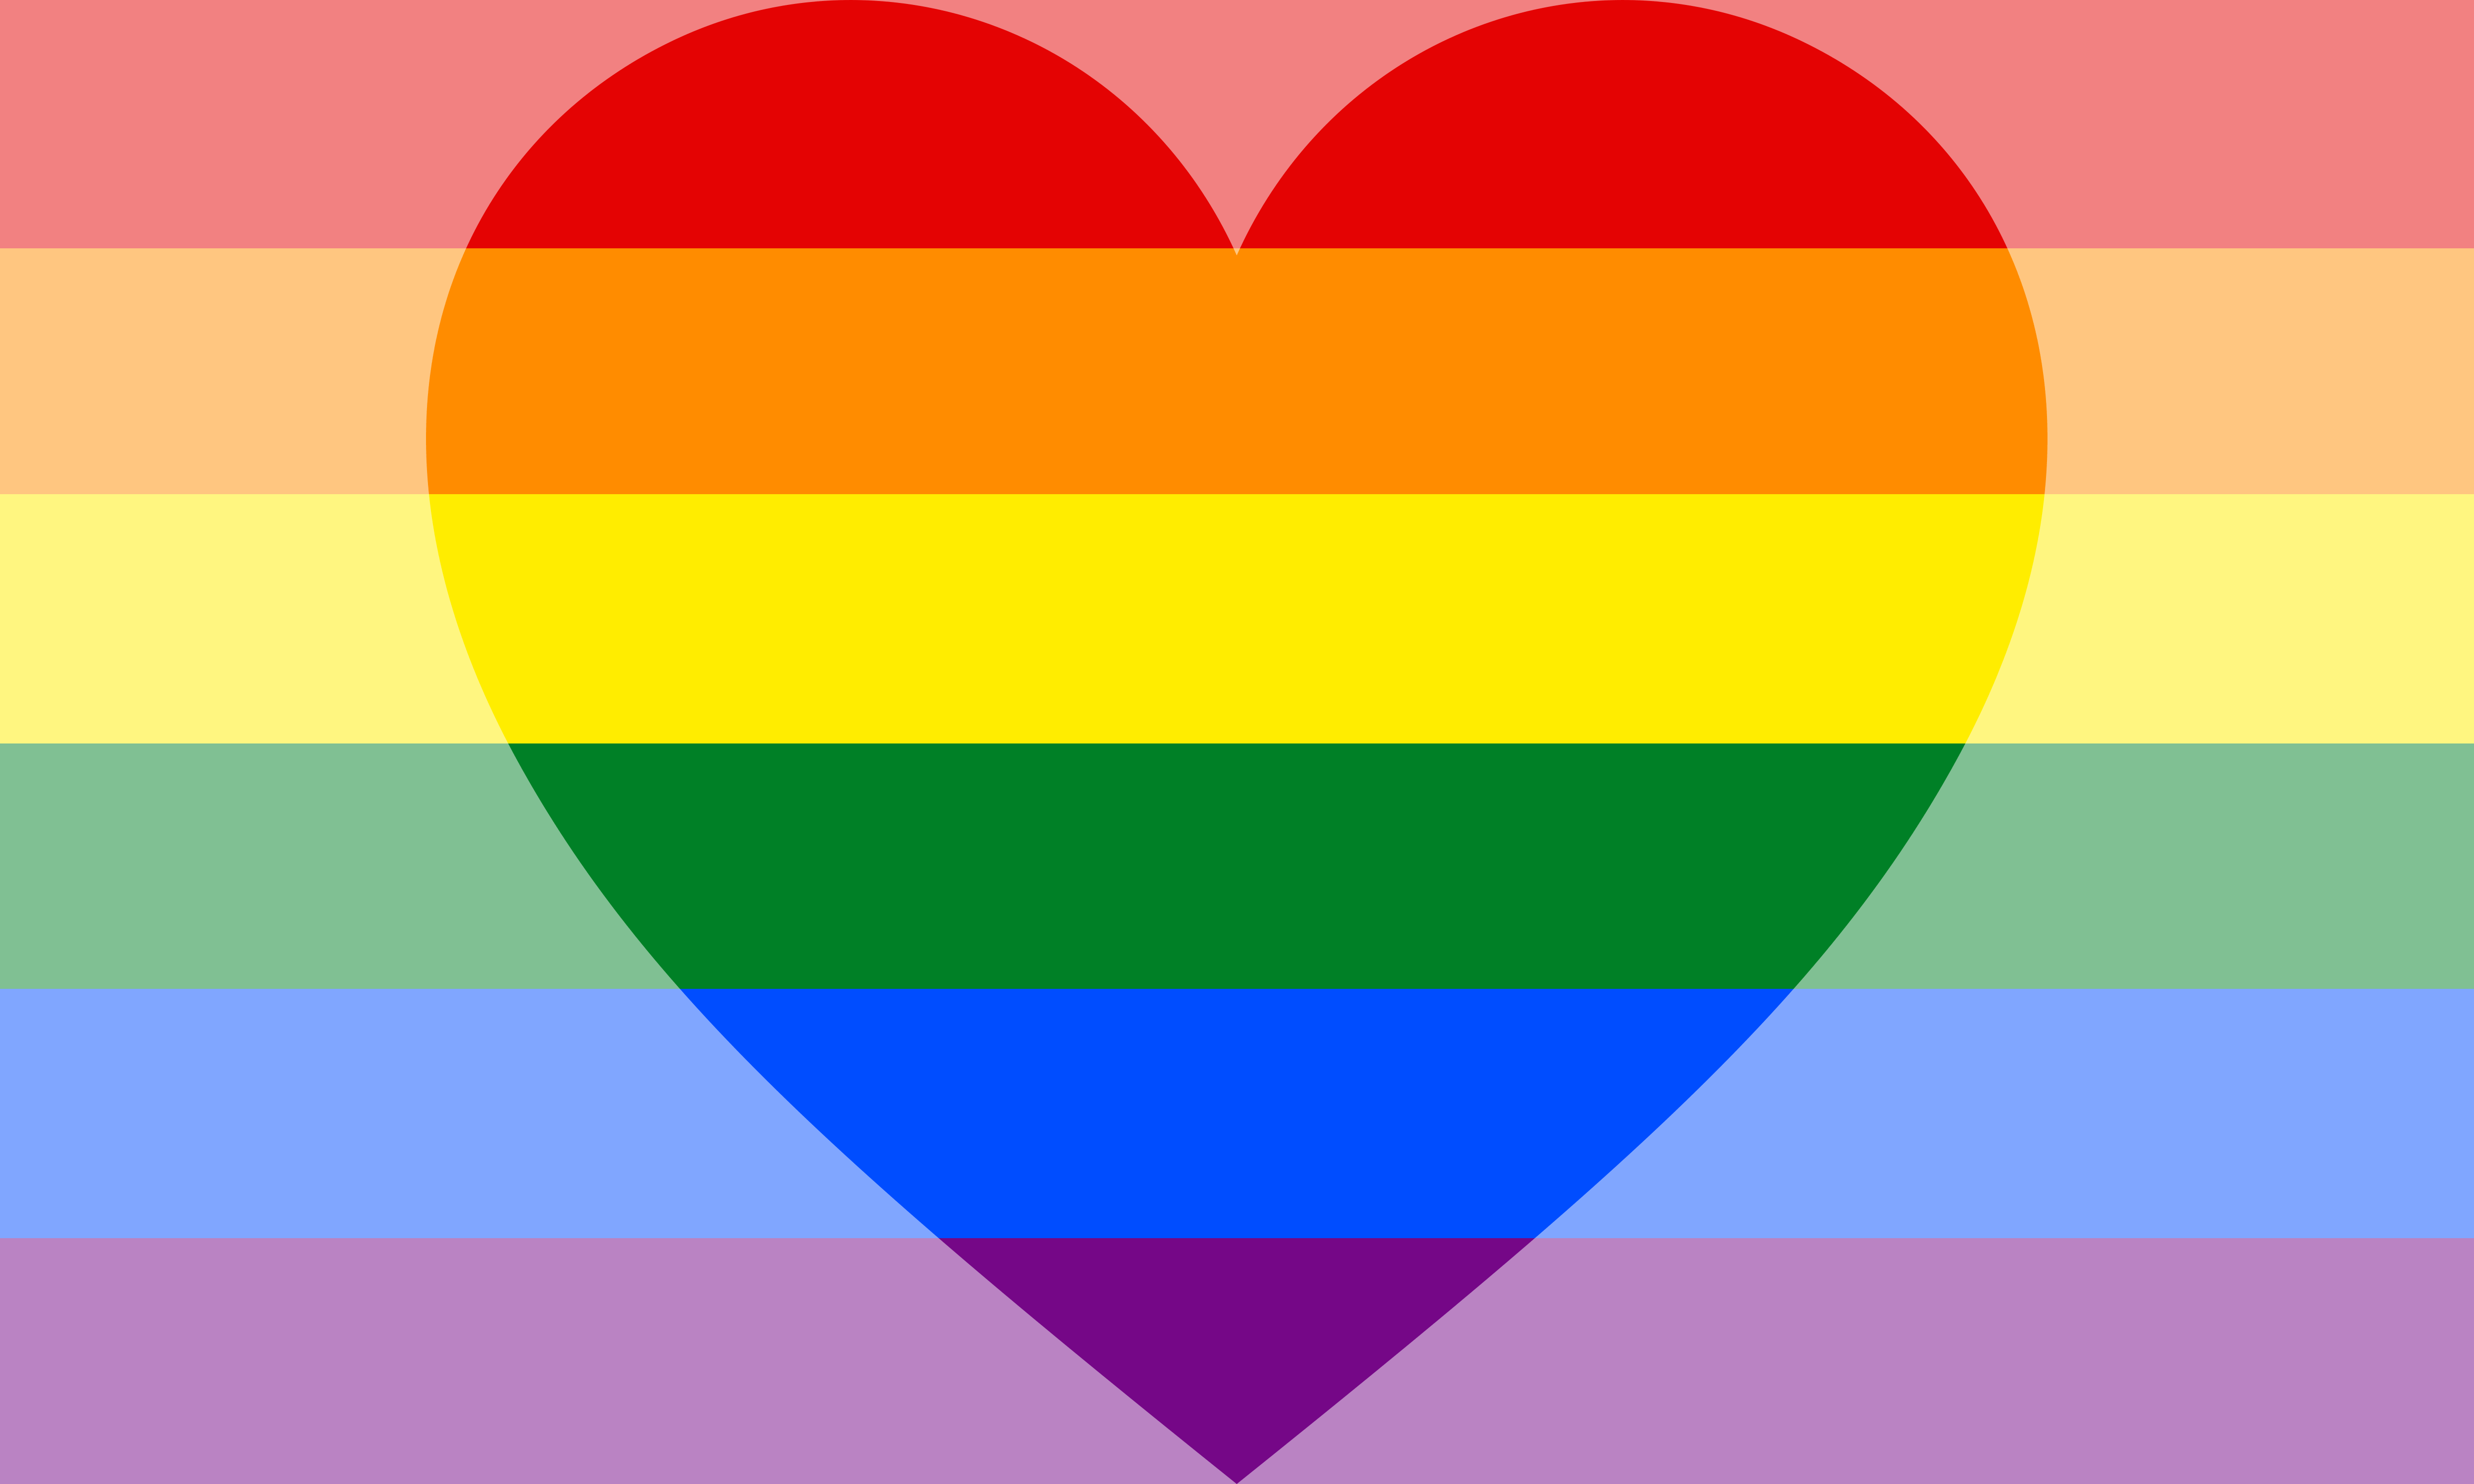 rainbow gay pride flag wallpaper